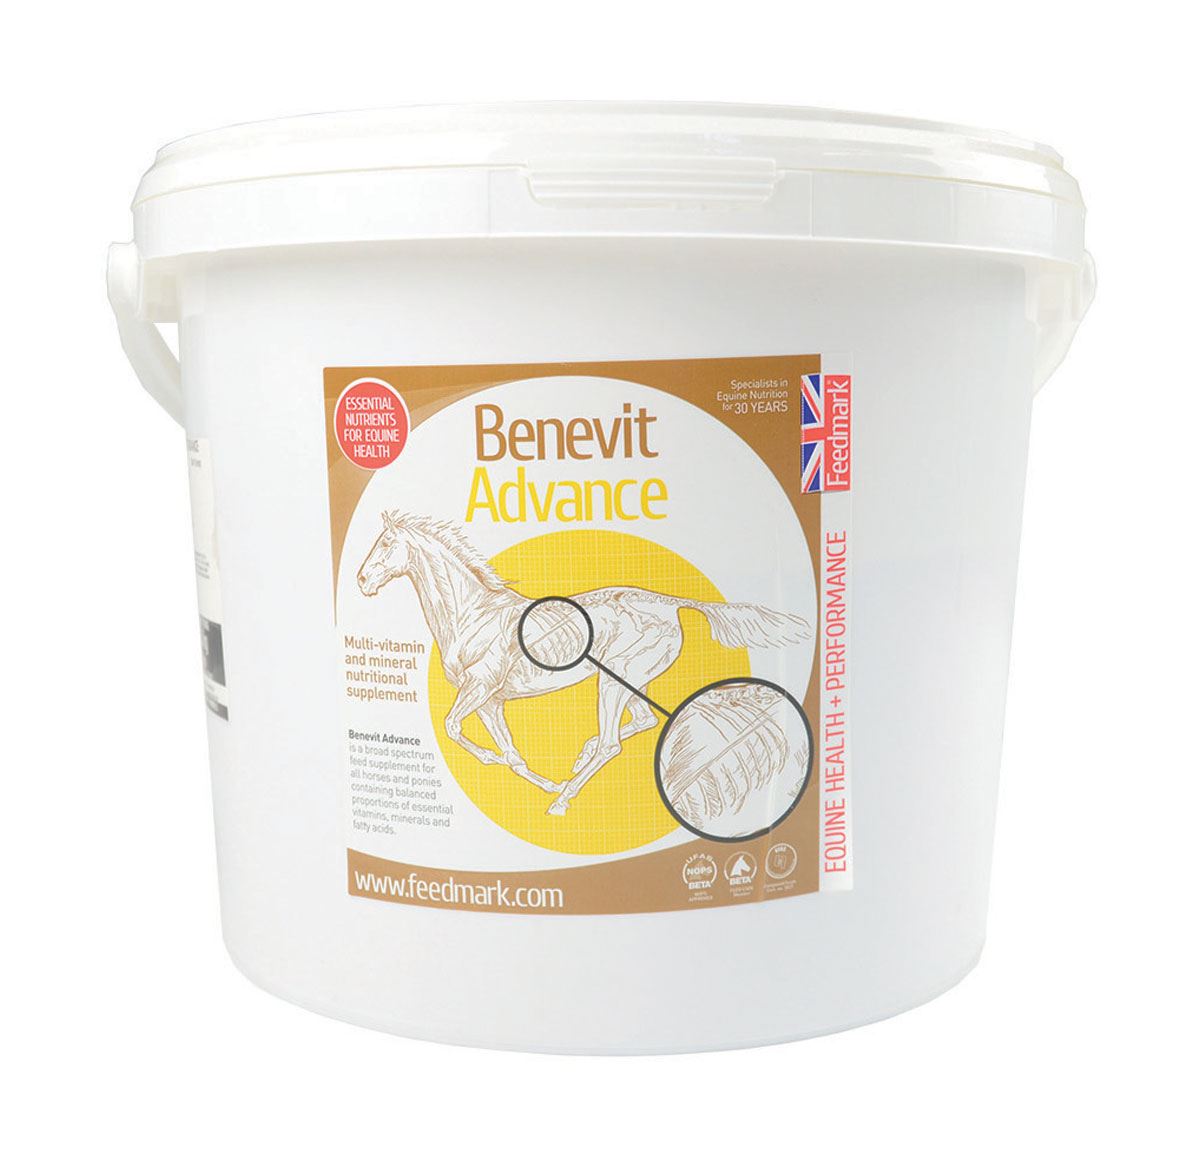 Feedmark Benevit Advance - Just Horse Riders